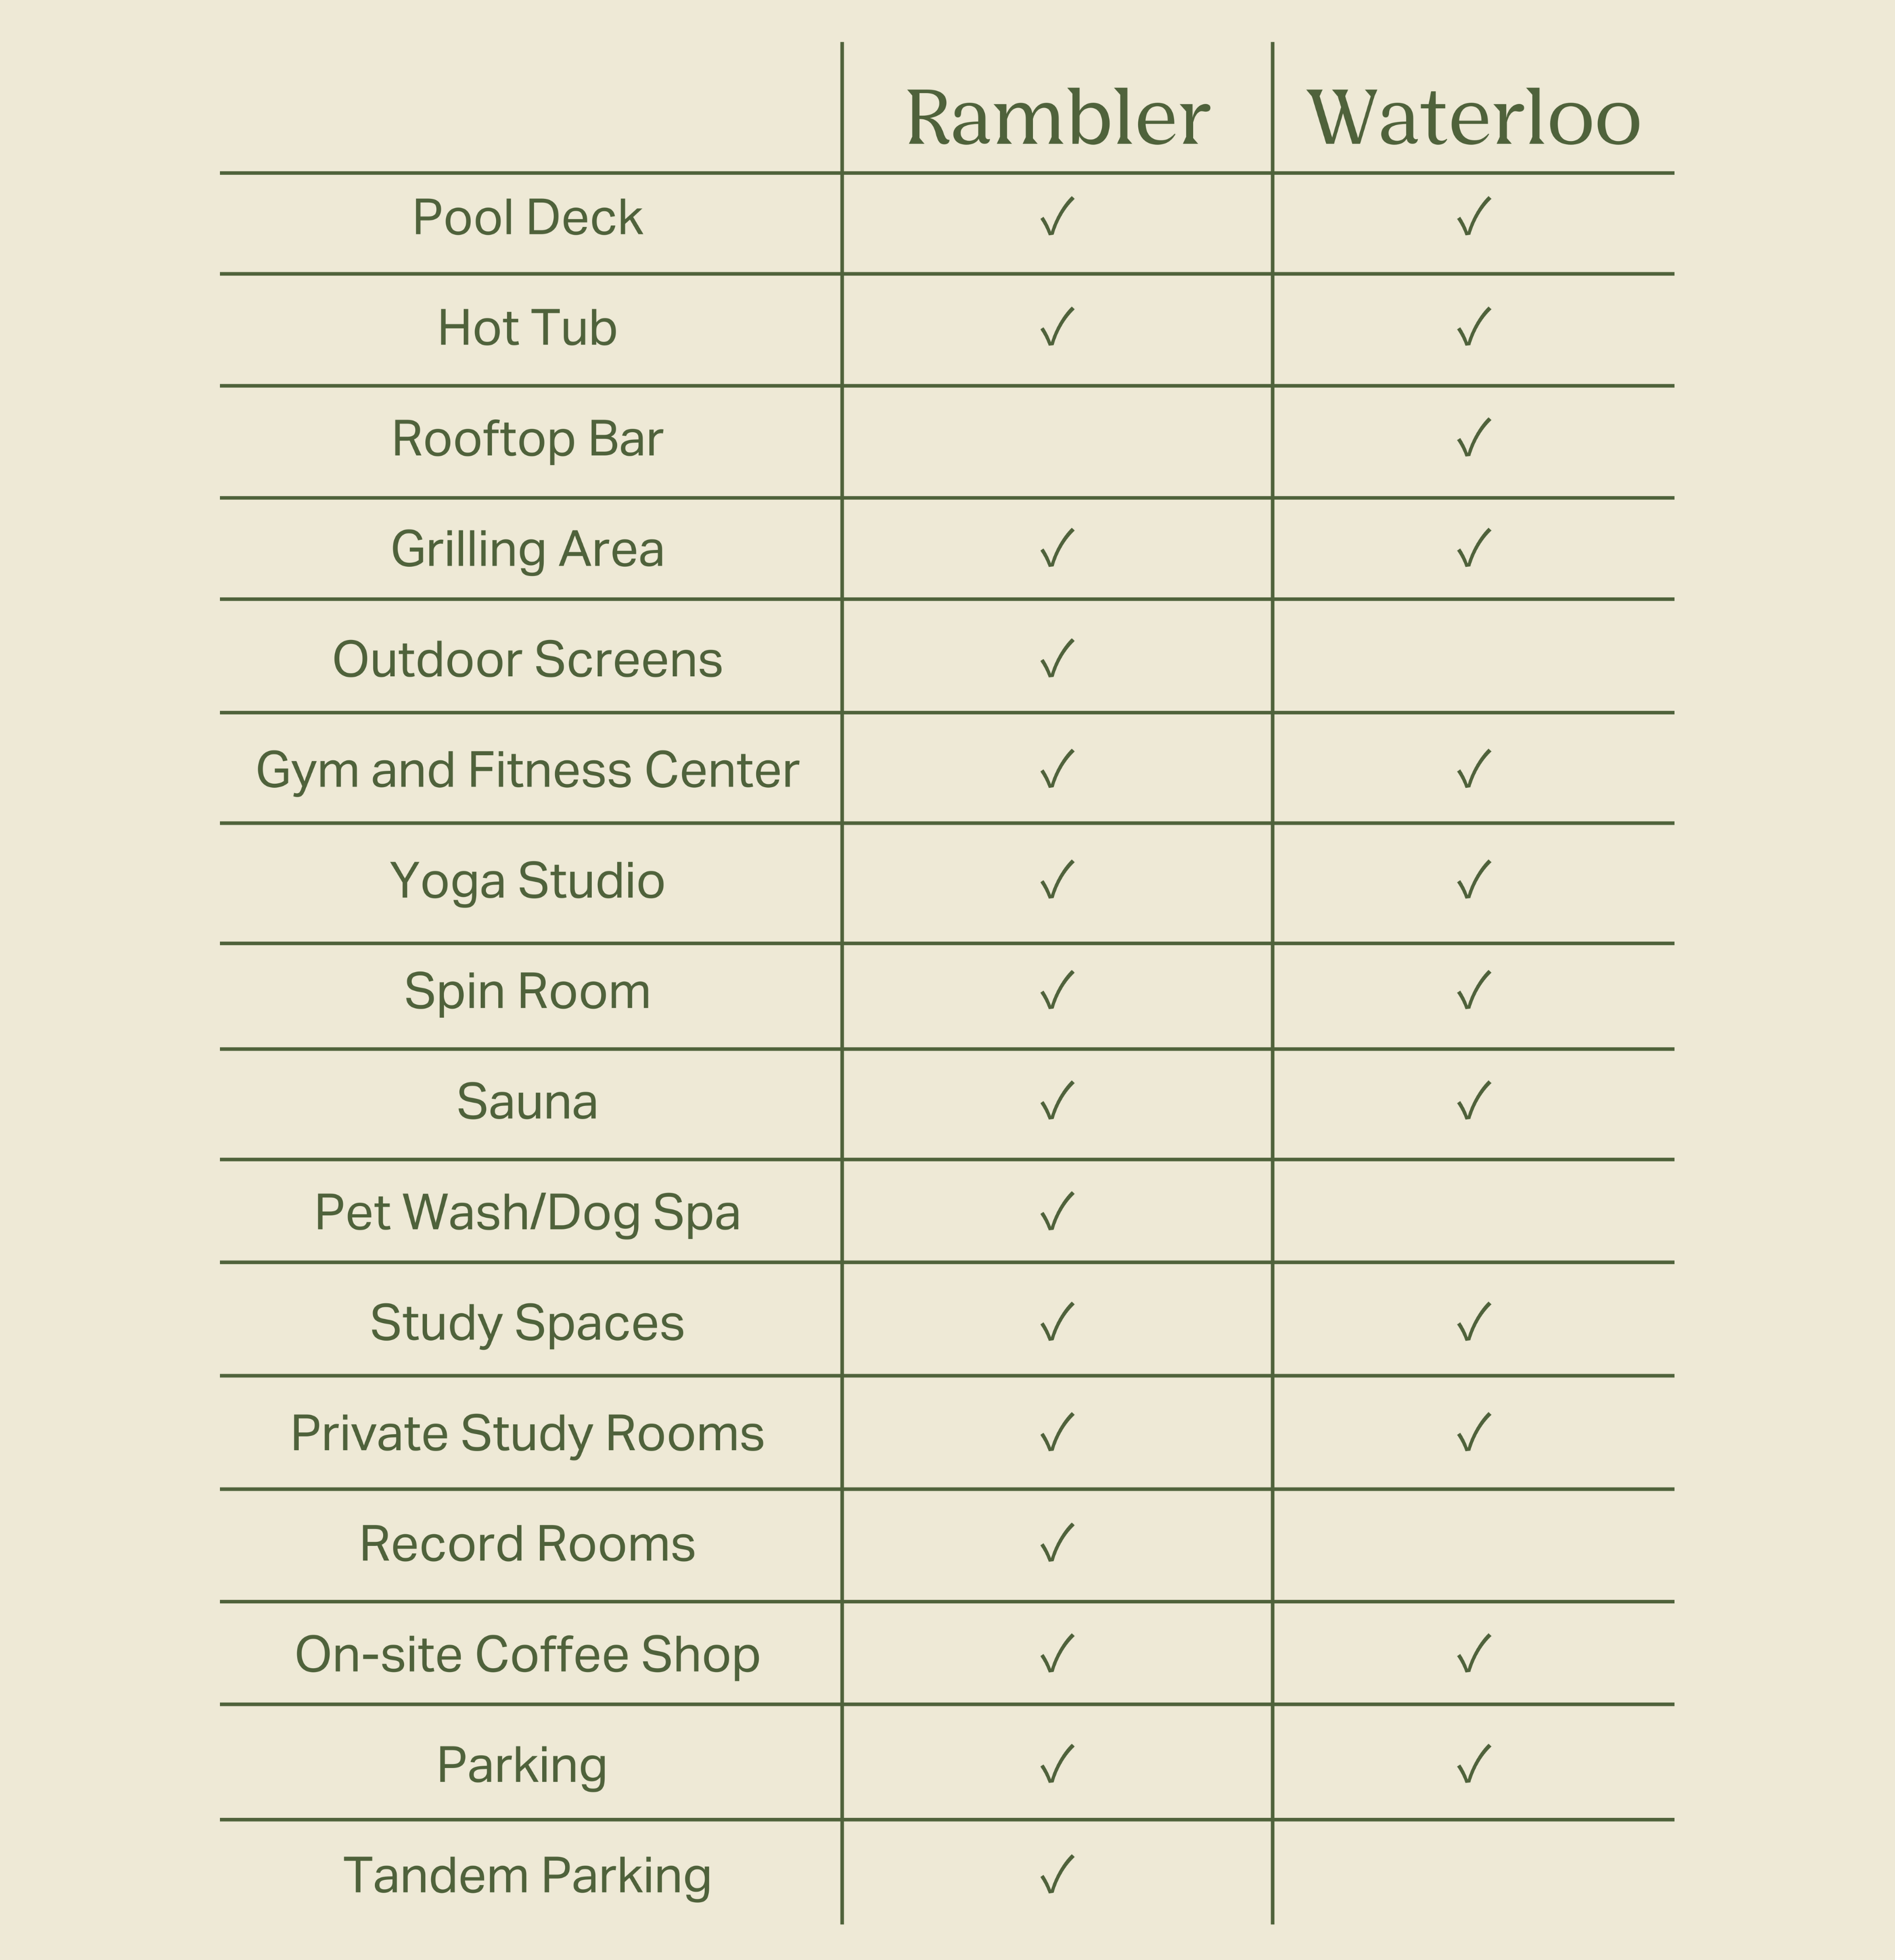 rambler vs waterloo amenities